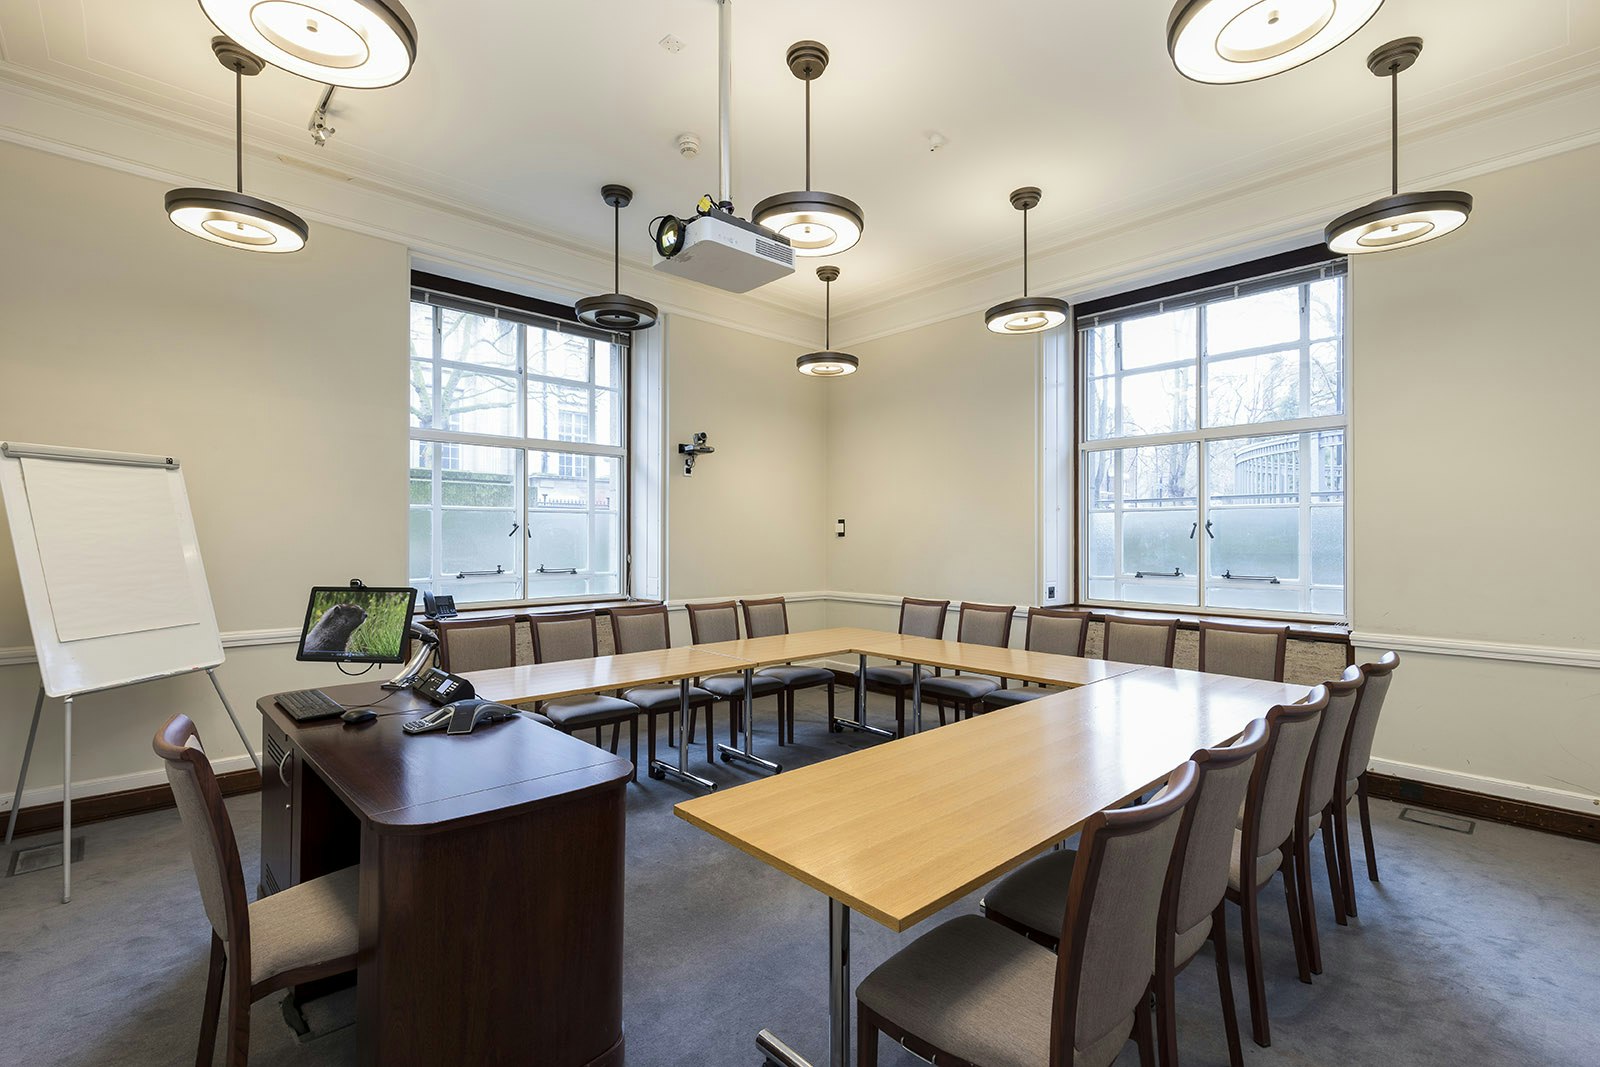 University of London Venues - Meeting Rooms - Breakout Spaces image 3